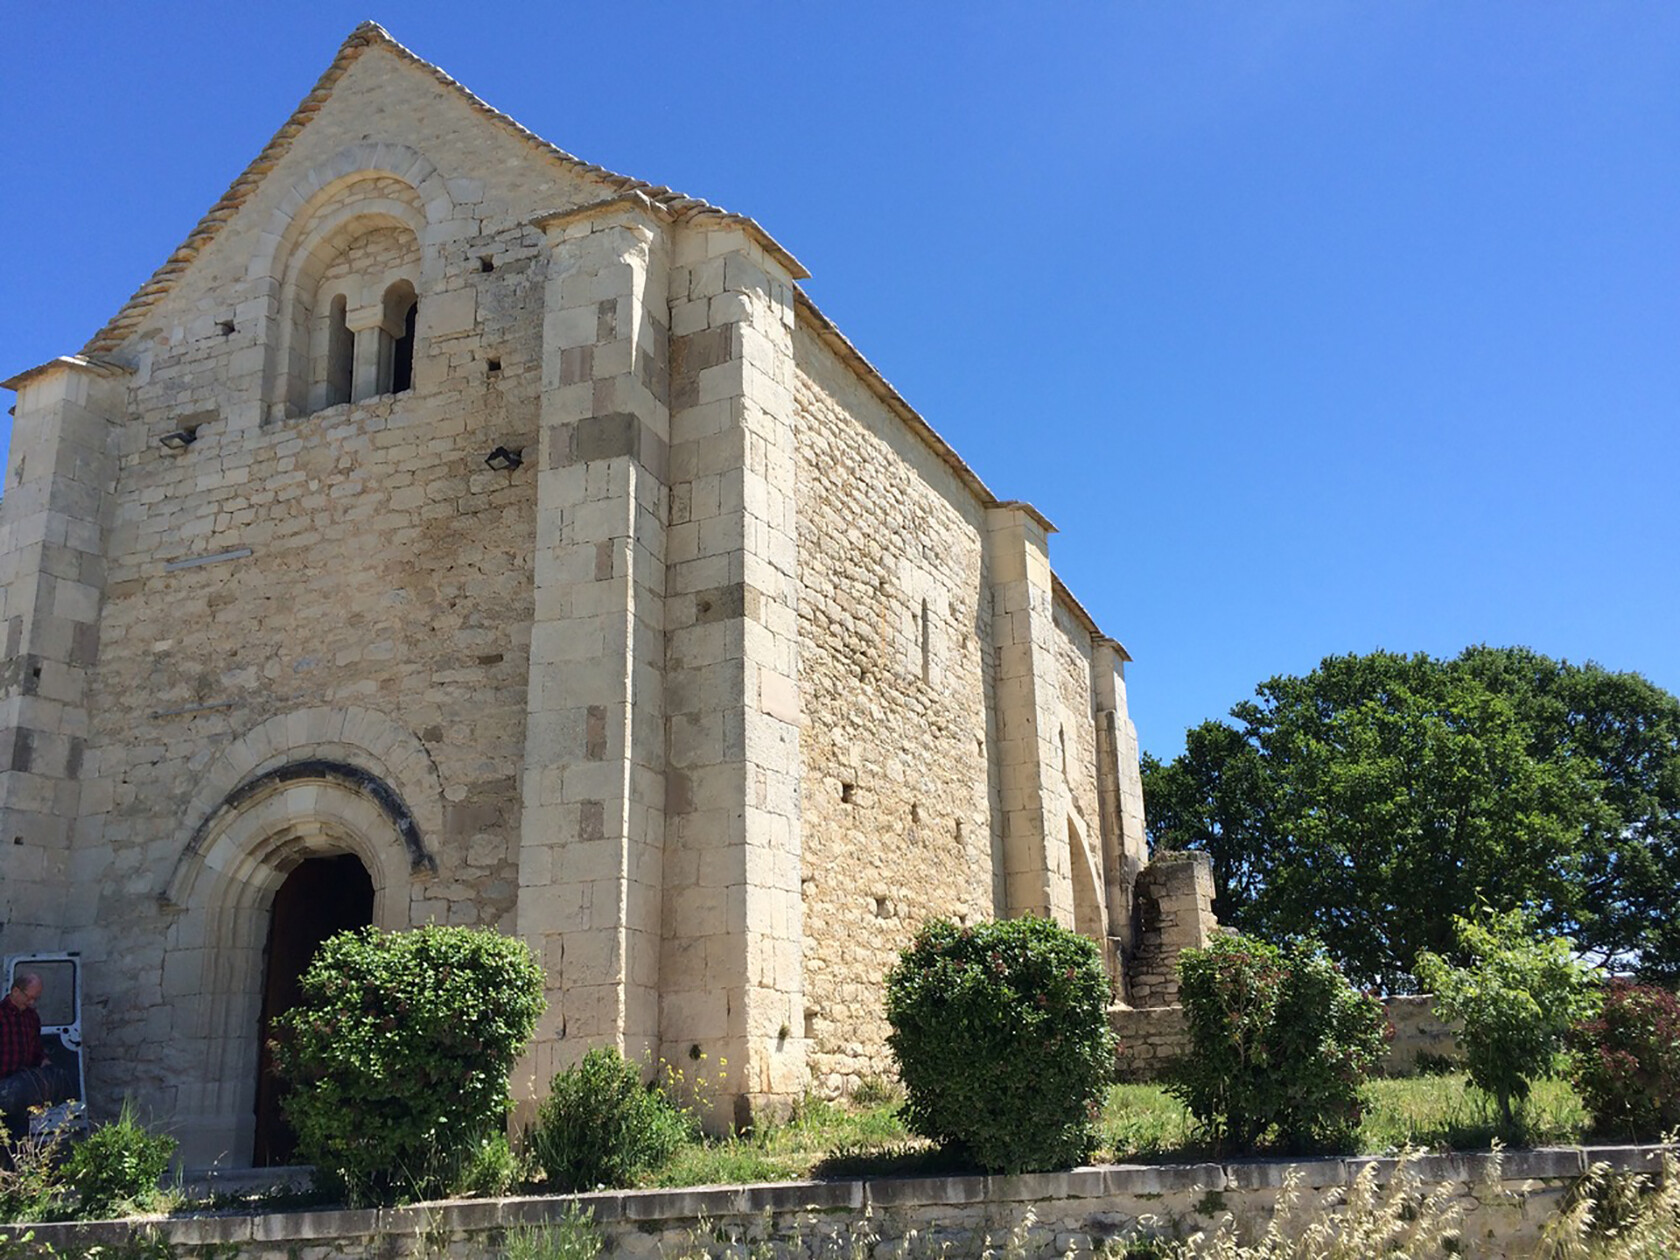 12th century church called the Chapelle de la Clastre